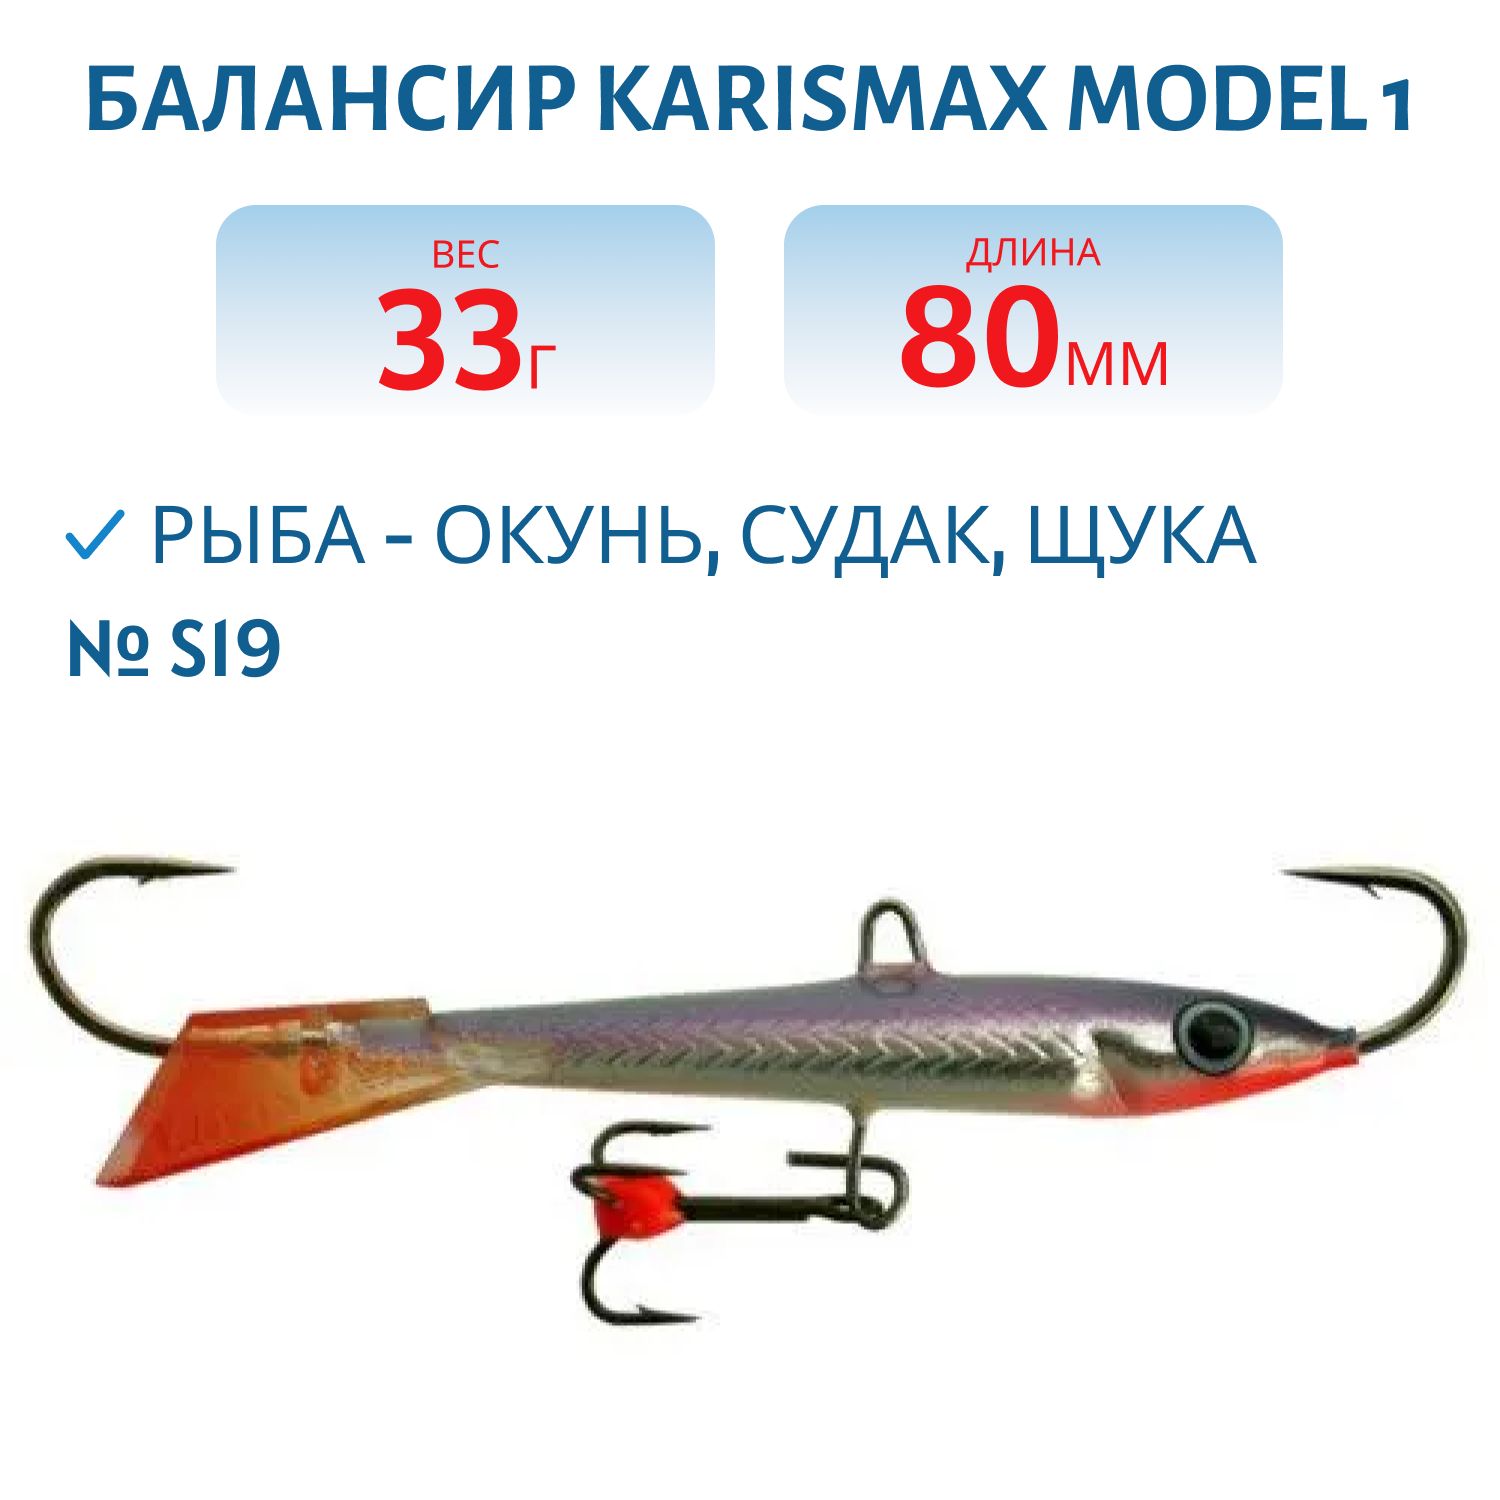 Балансир KARISMAX MODEL 1 COLOR S19